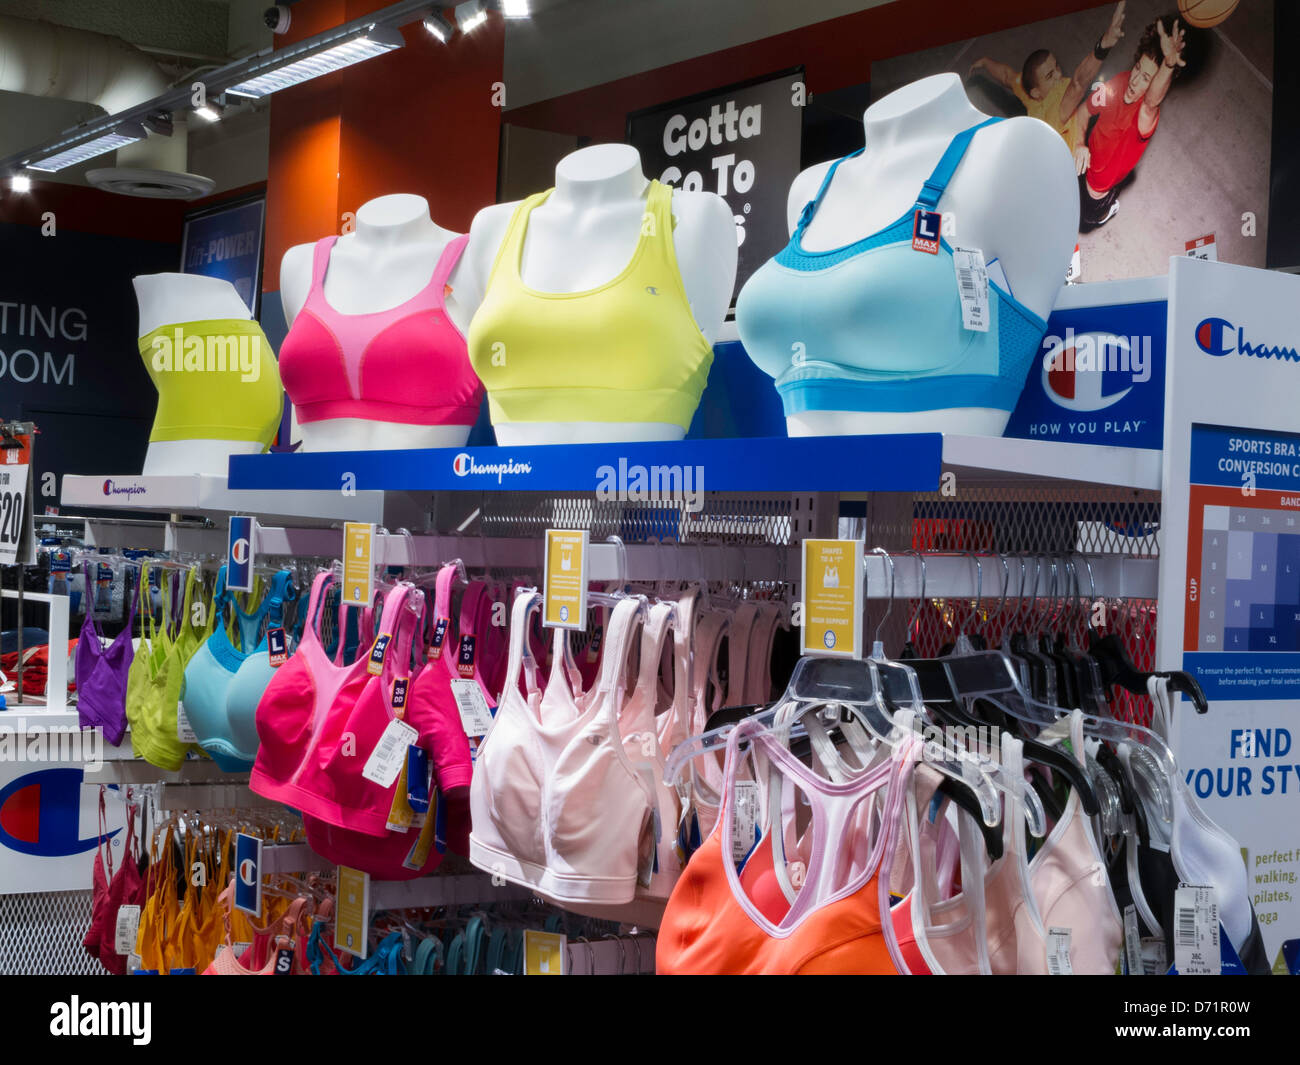 https://c8.alamy.com/comp/D71R0W/sports-bras-display-modells-sporting-goods-store-interior-nyc-D71R0W.jpg